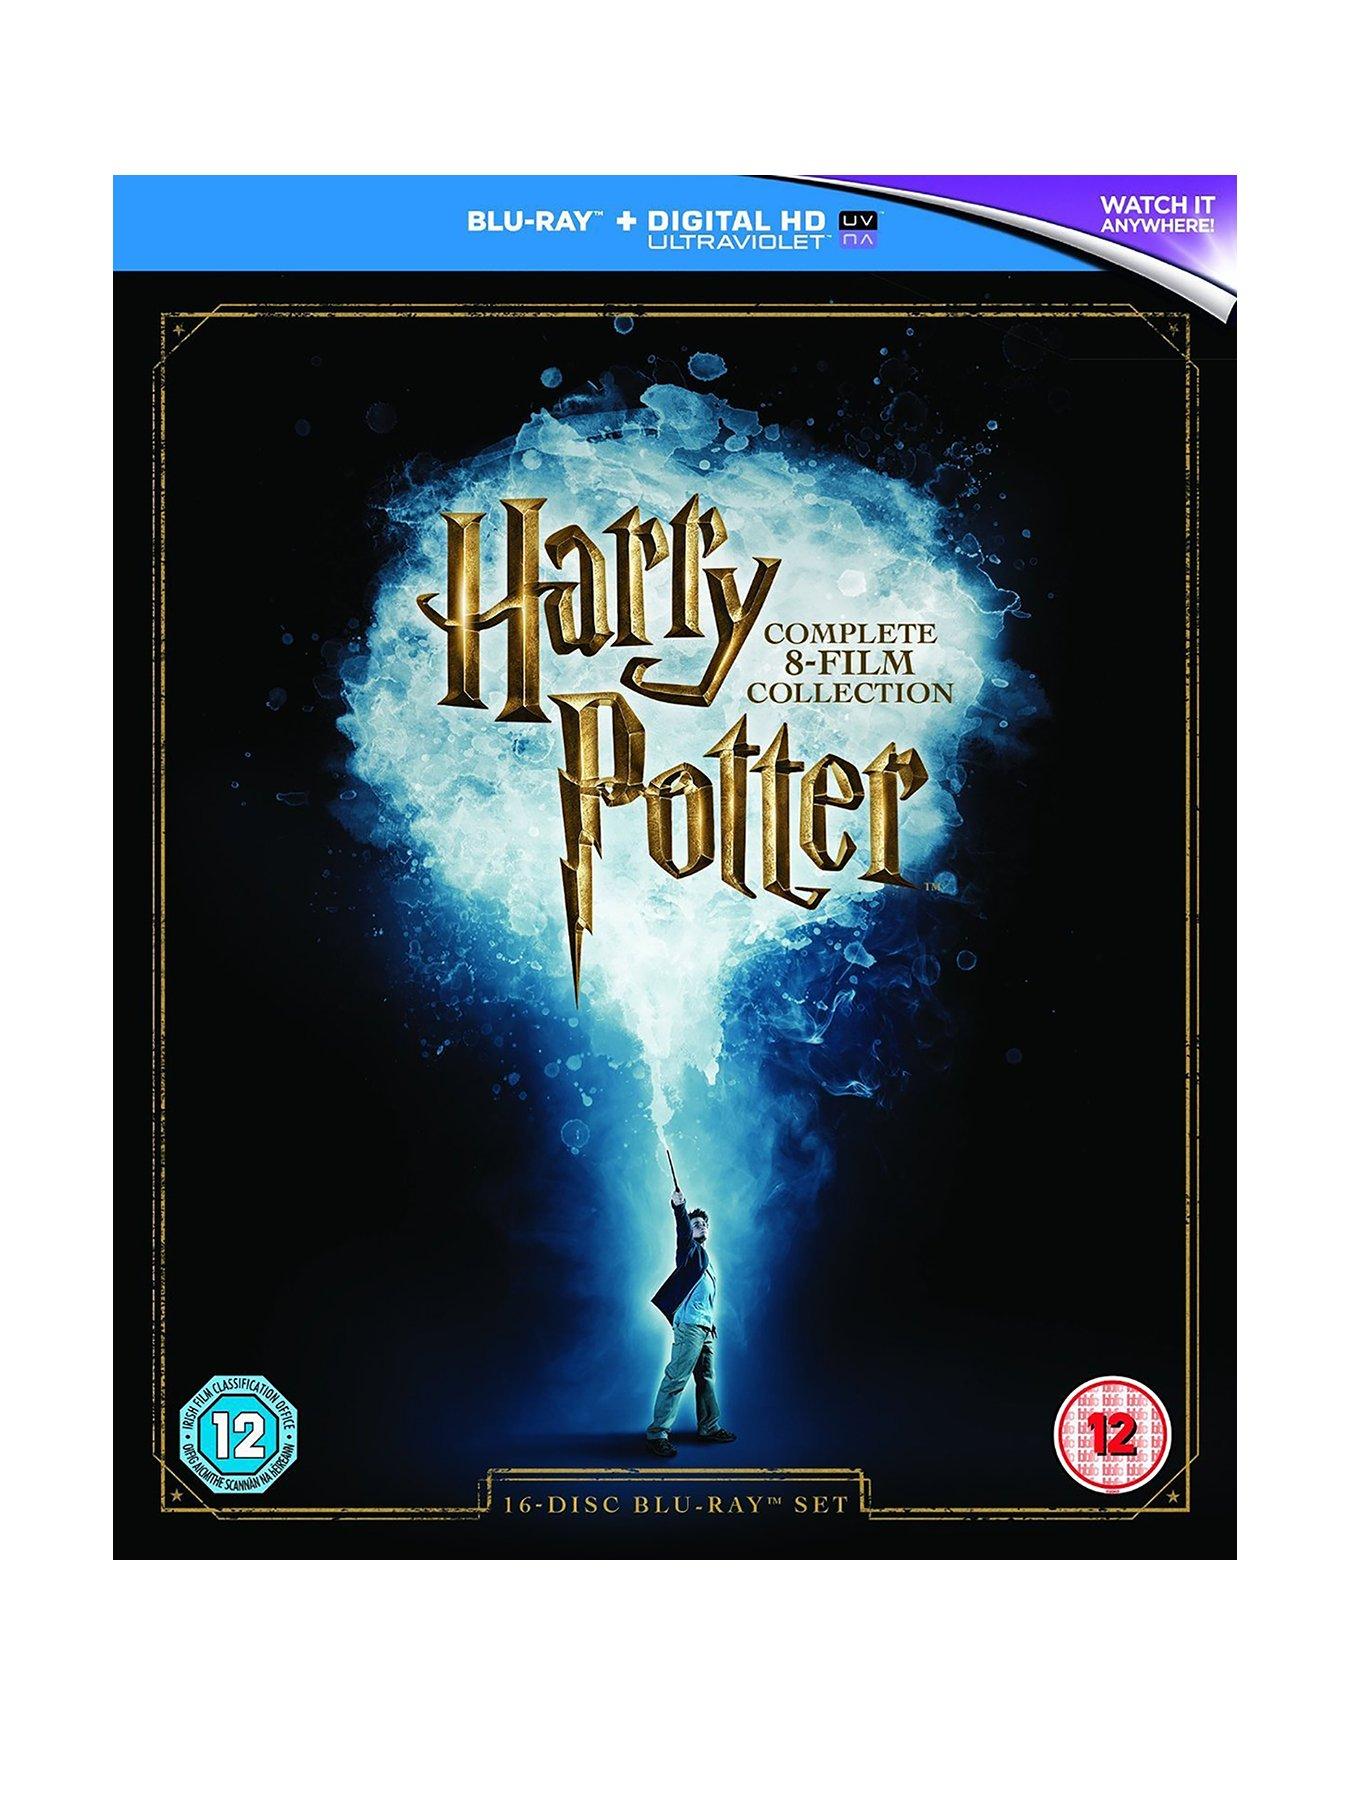 Harry Potter Hogwarts Collection (Blu-ray+DVD,31-Disc Set,8-Film